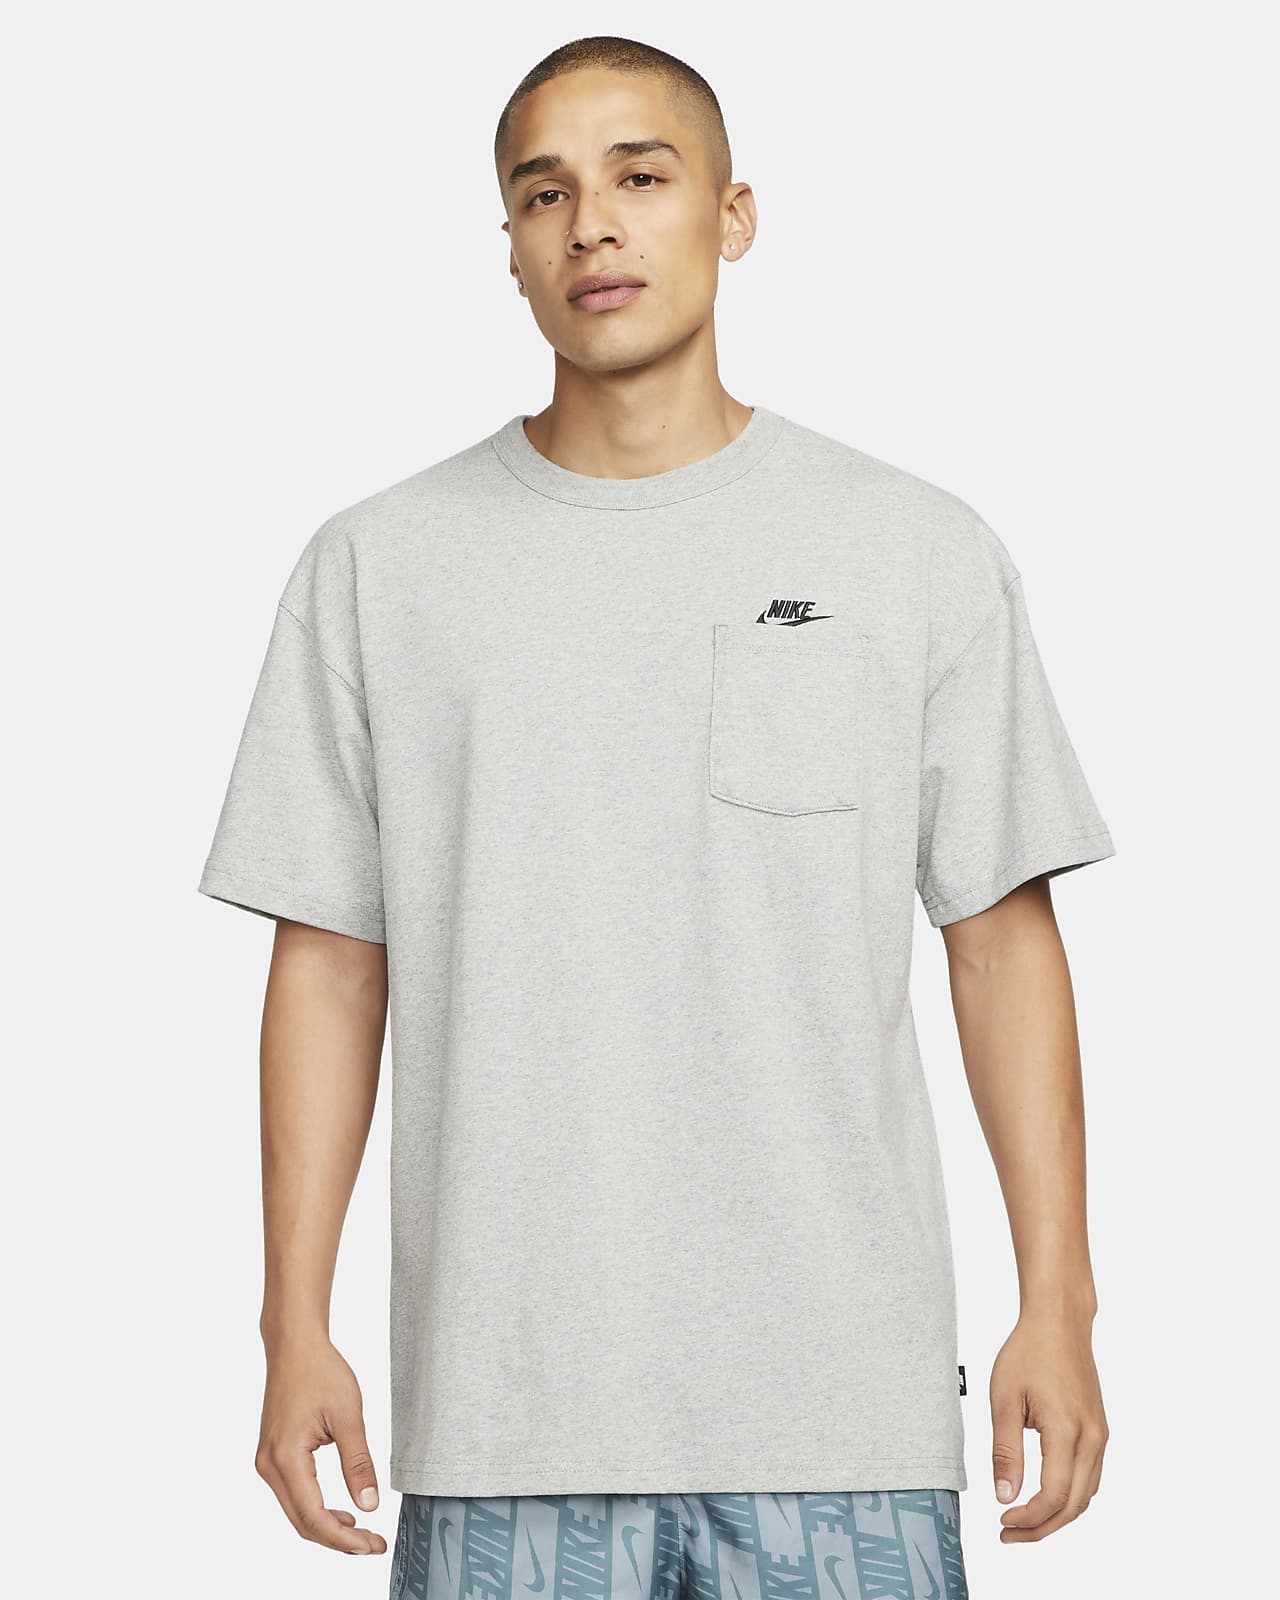 Bedankt Ontmoedigen barrière Nike Sportswear Premium Essentials Men's Pocket T-Shirt. Nike FI